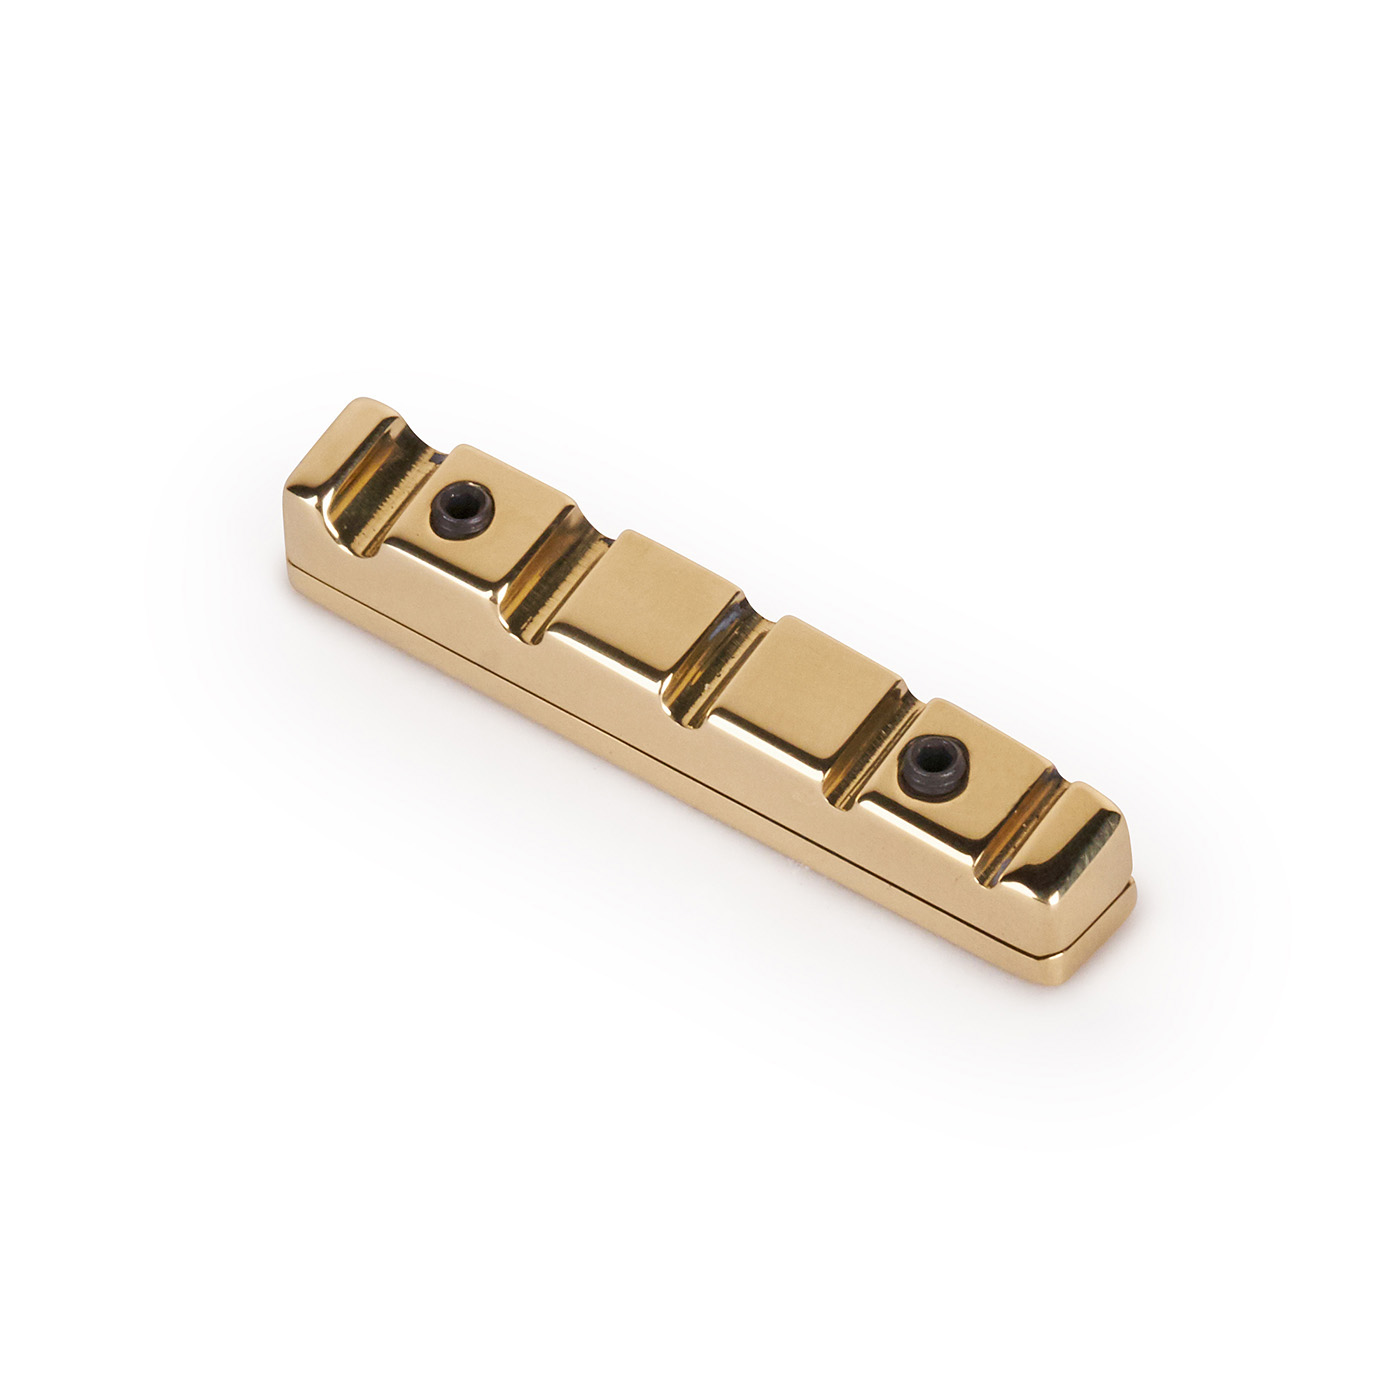 Warwick Parts - Just-A-Nut III, 5-String, Lefthand, 45 mm width - Brass